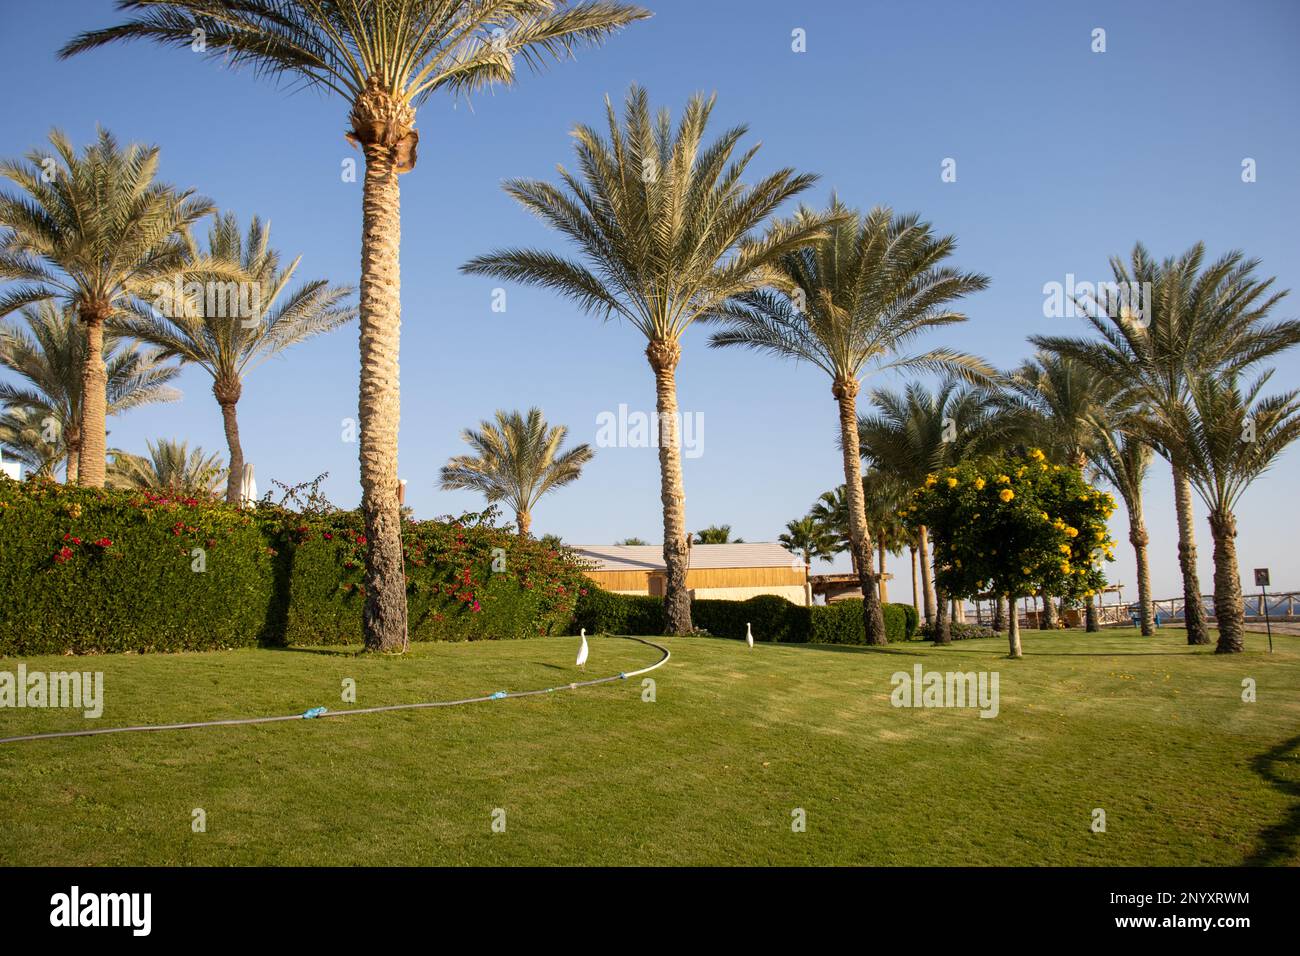 California fan palm (Washingtonia filifera) planted in gardens on the coast of Egypt Stock Photo